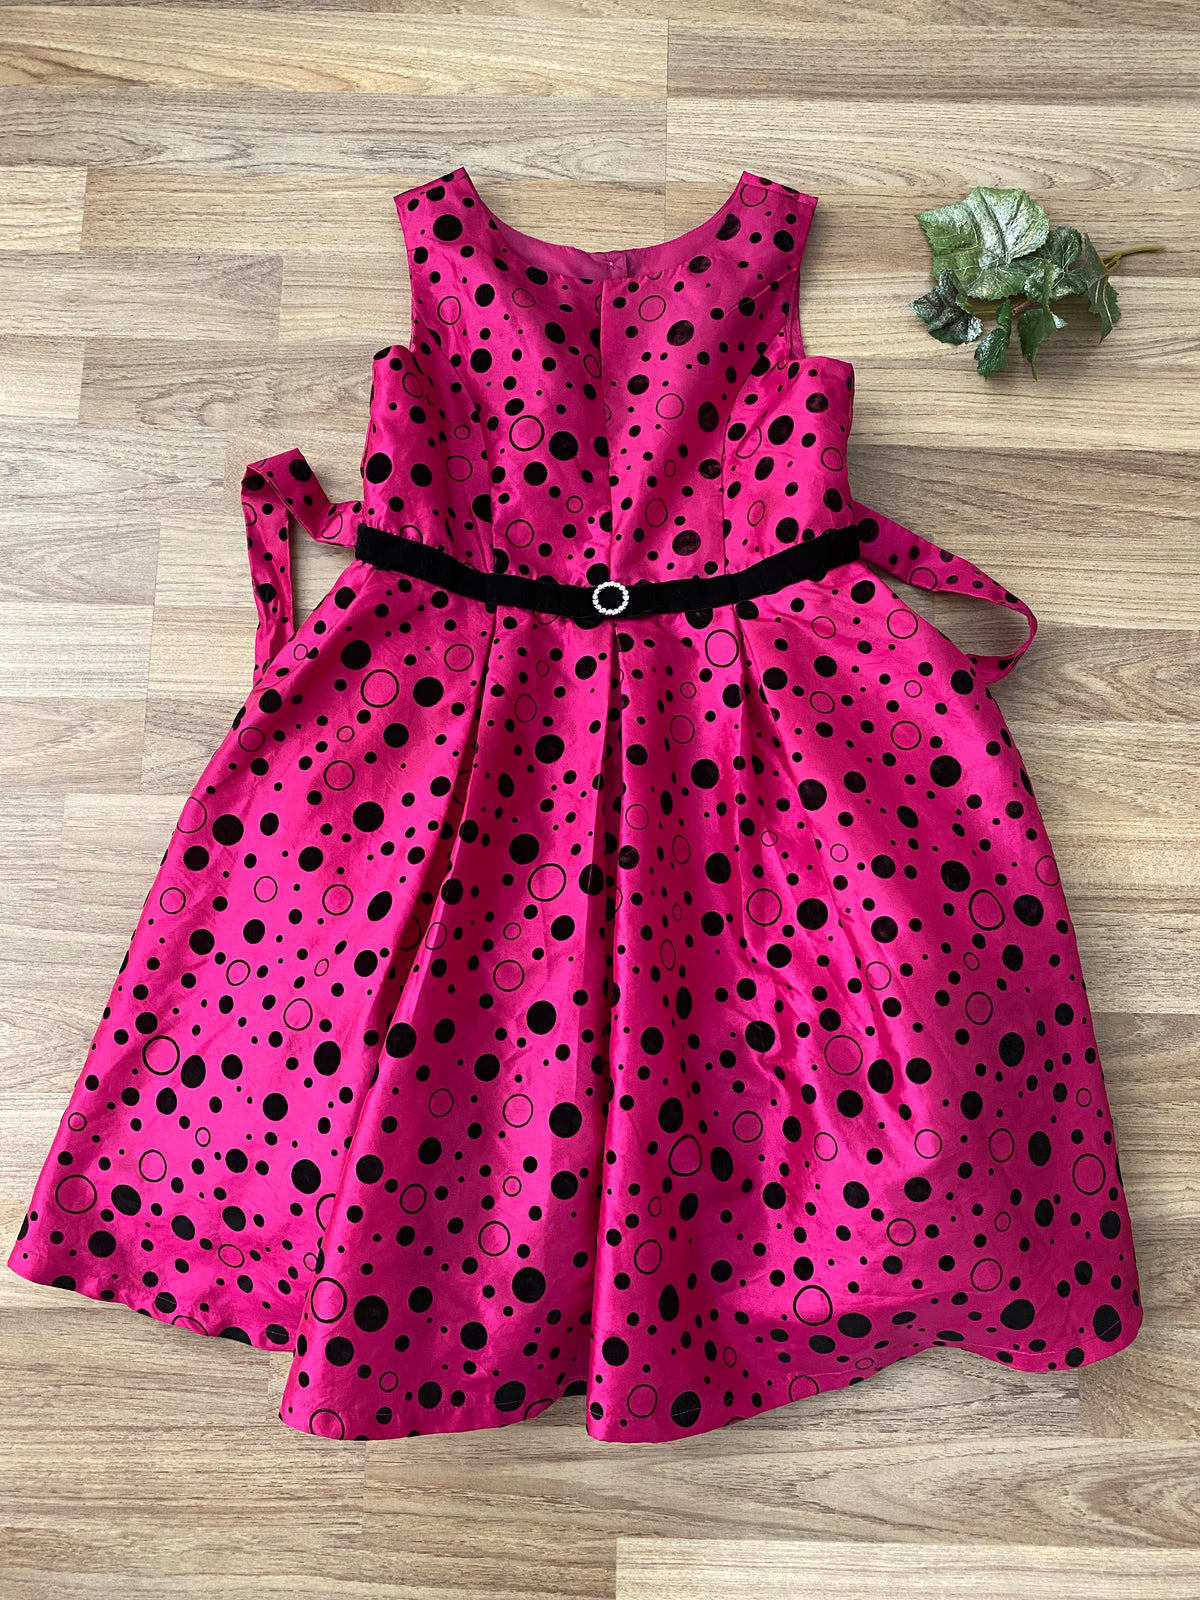 Dress (Girls Size 10)